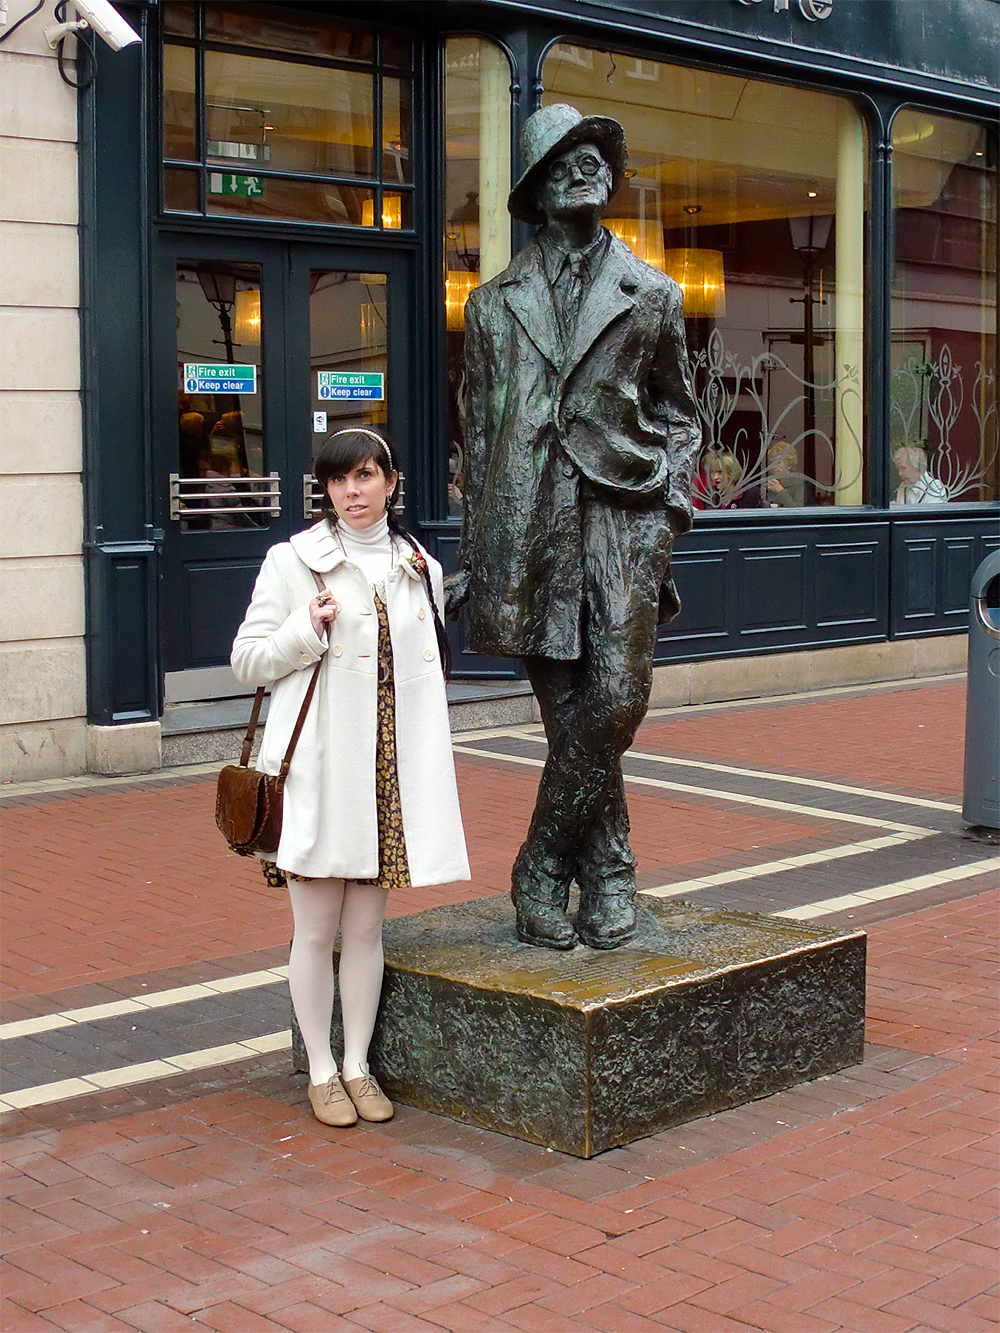 Statue of James Joyce on North Earl Street - Dublin, Ireland.